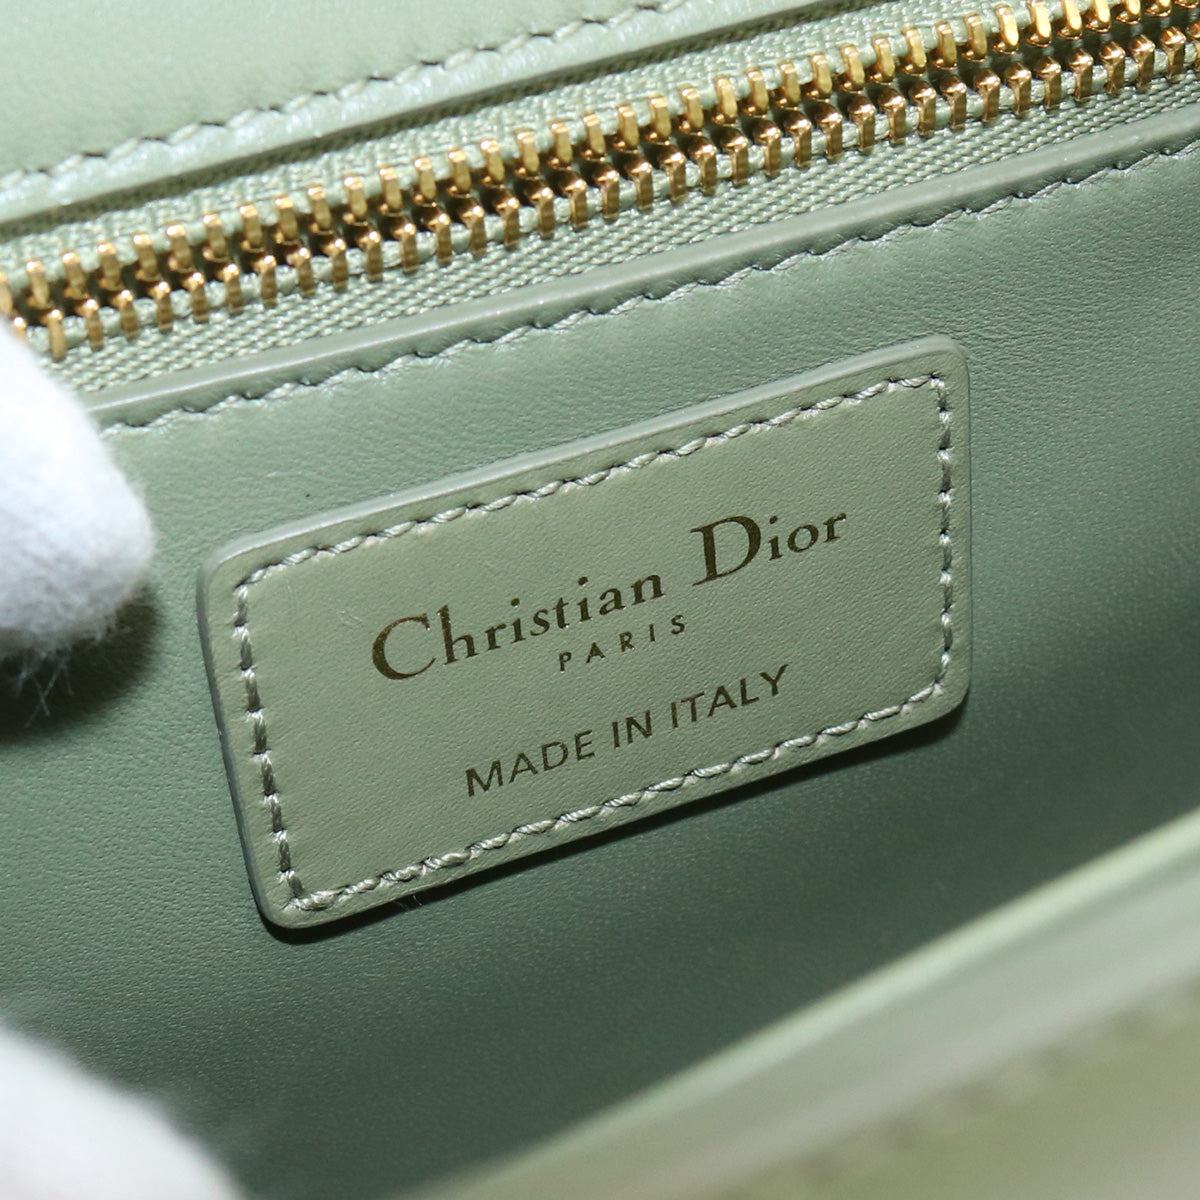 Christian Dior クリスチャンディオール 30モンテーニュ バッグ M9203 UMOS M52H 斜め掛け ショルダーバッグ レザー【中古】 レディース